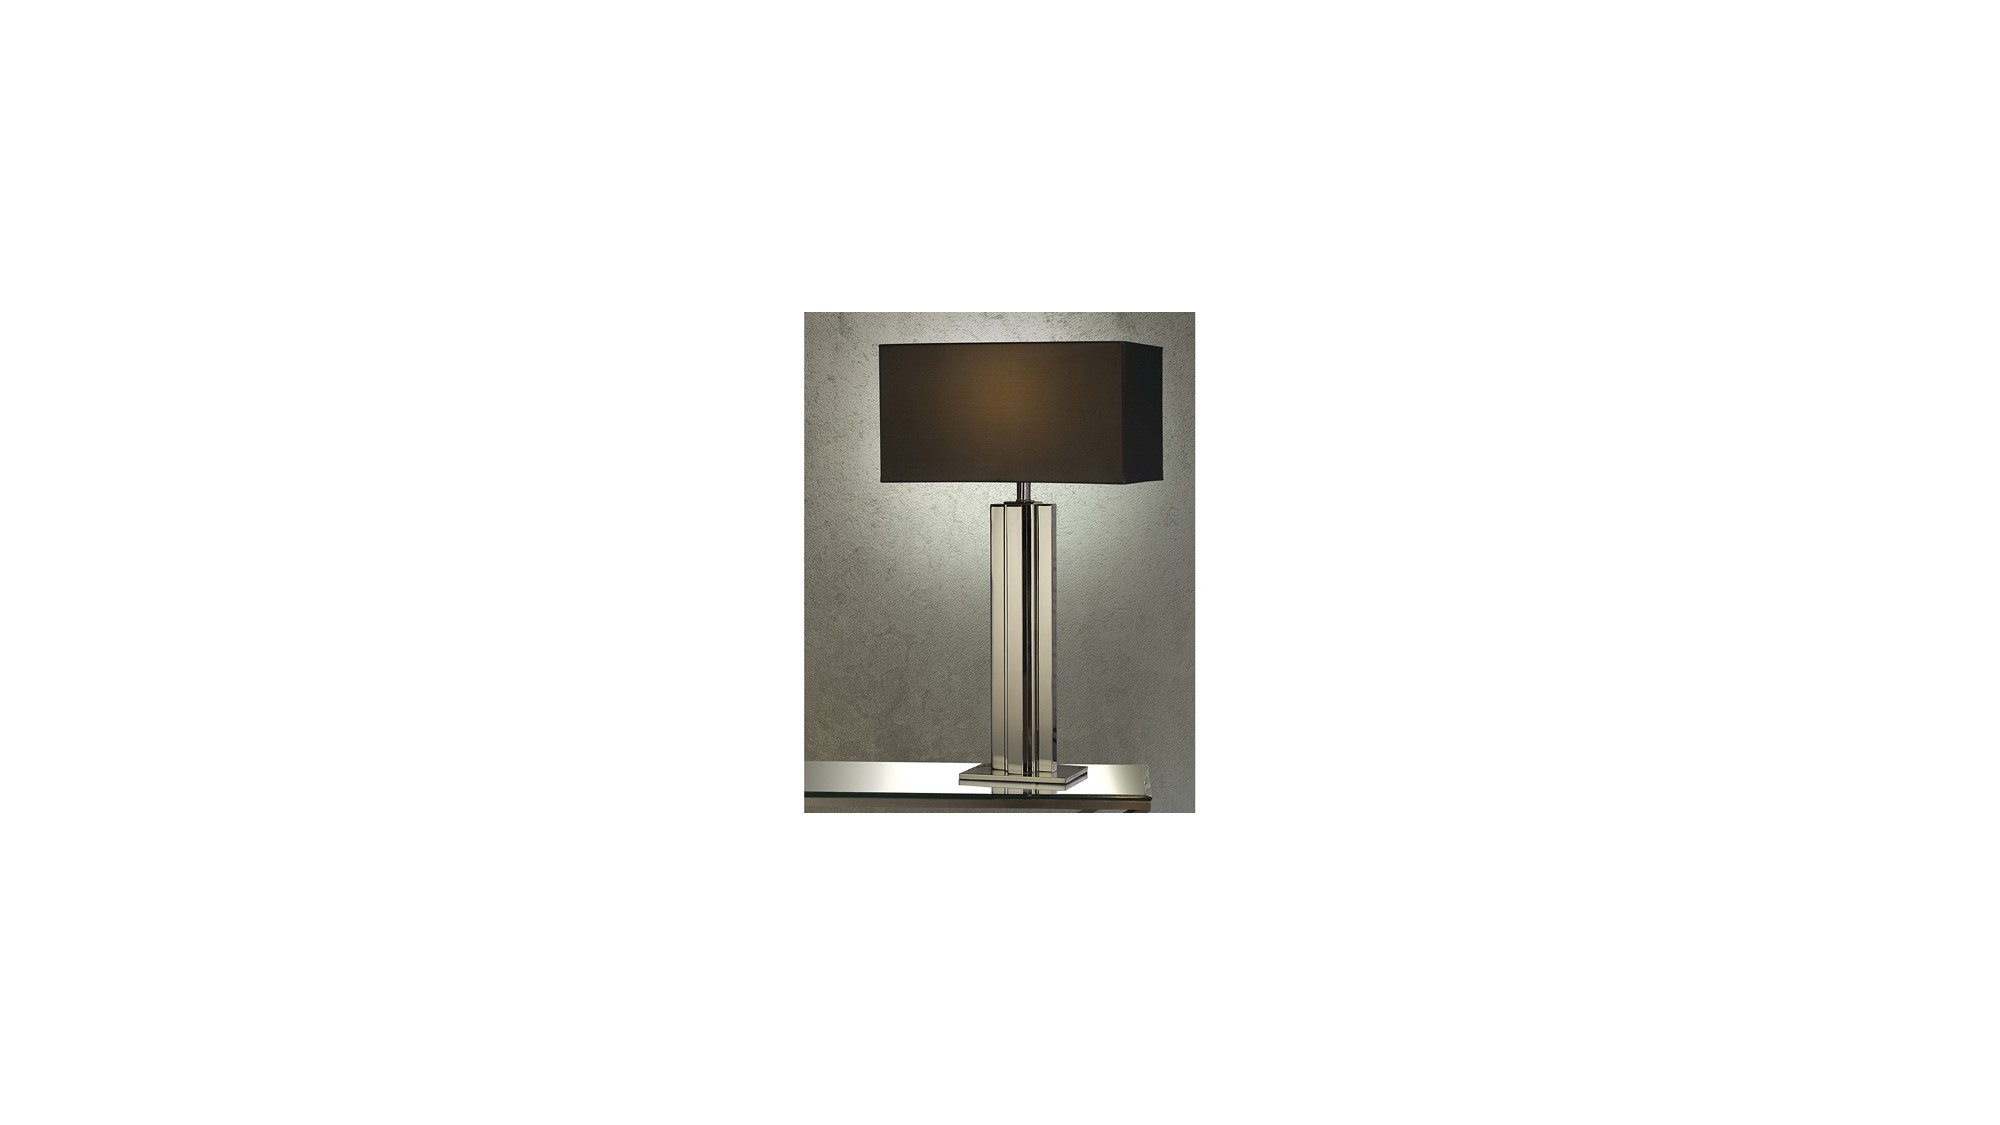 Paragon Table Lamp